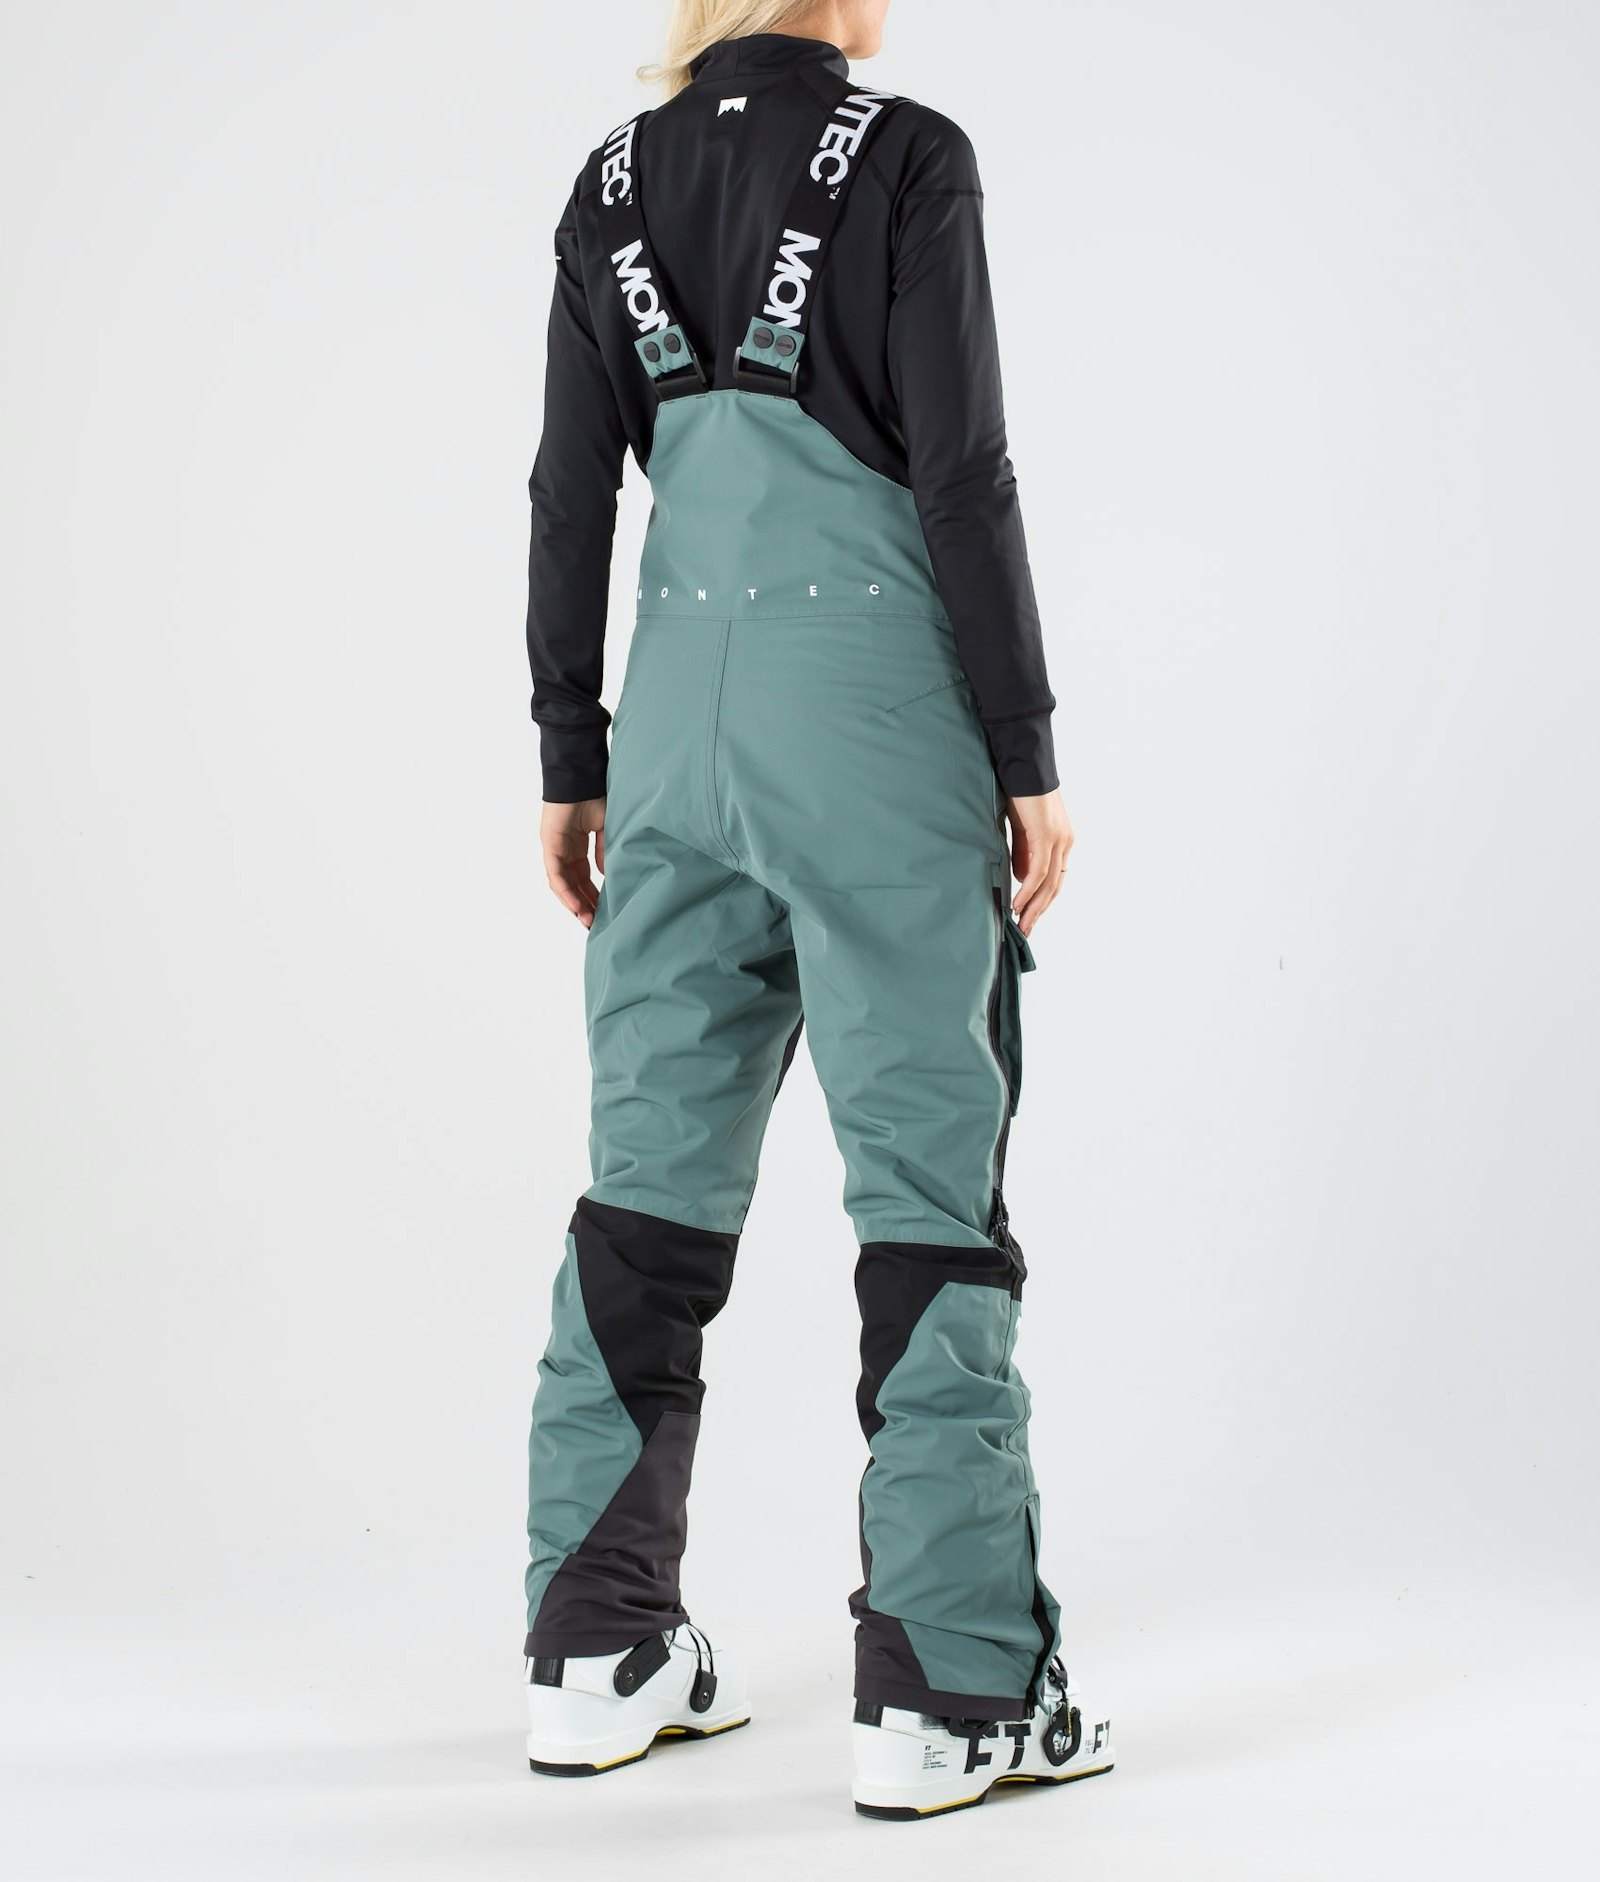 Fawk W 2019 Pantalon de Ski Femme Atlantic/Black